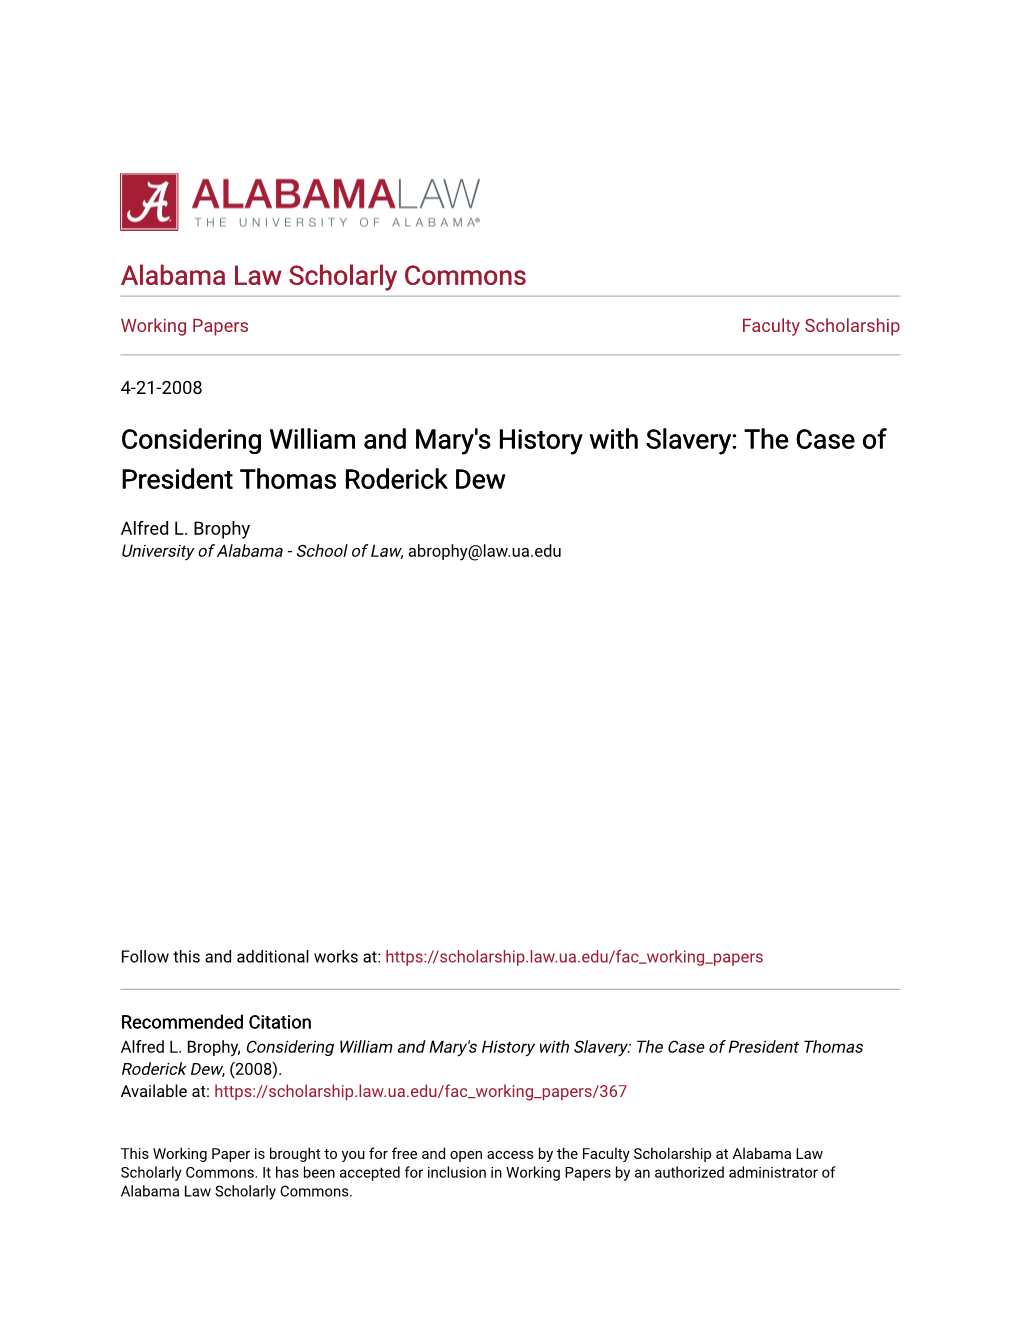 The Case of President Thomas Roderick Dew